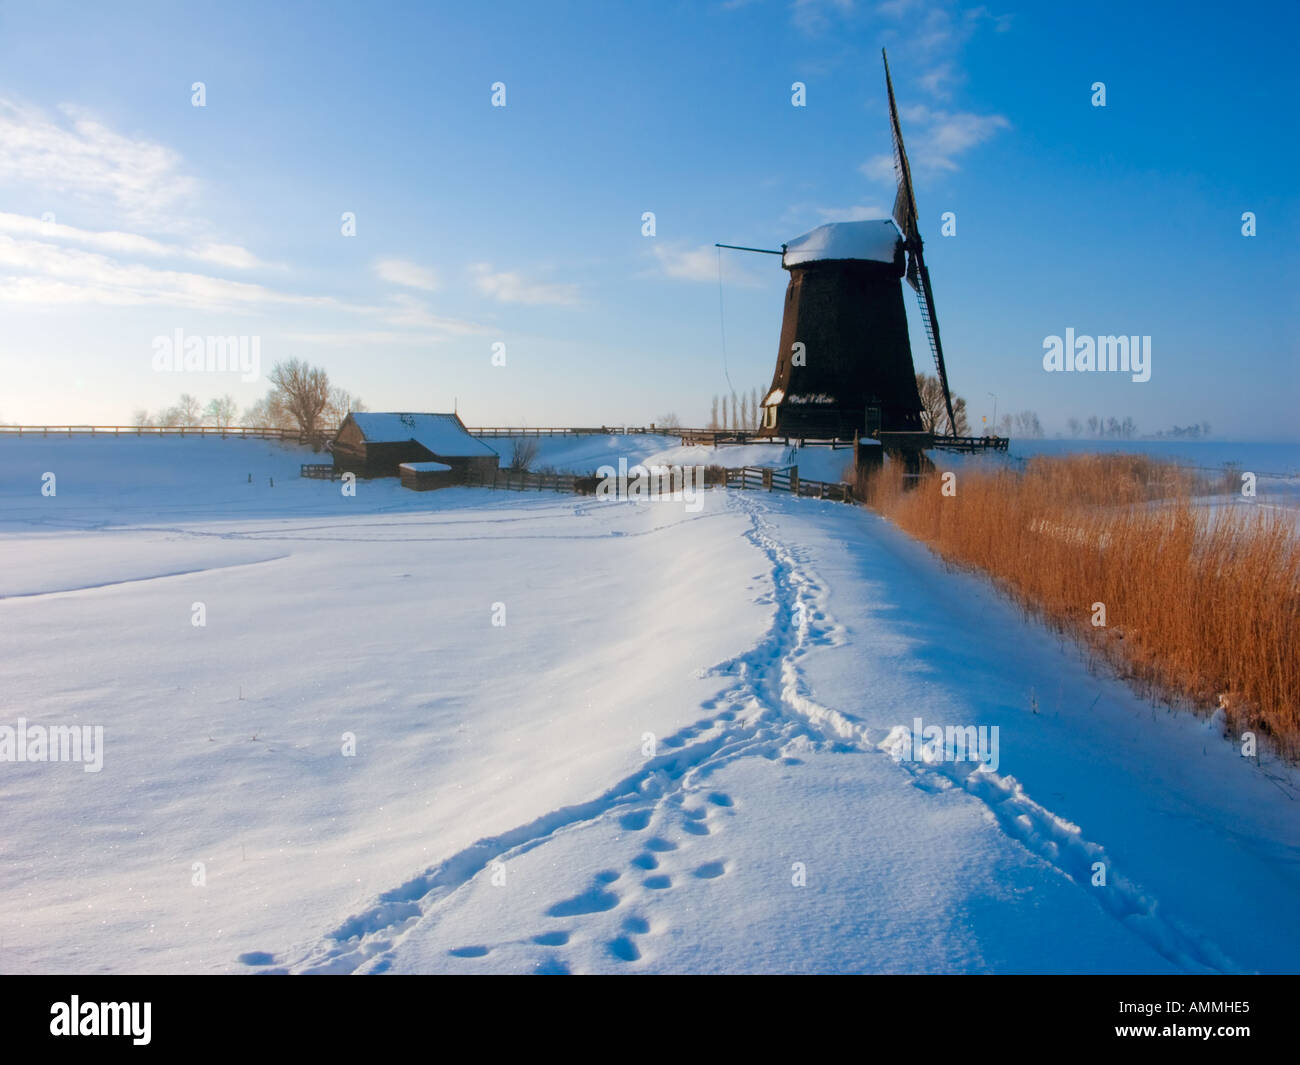 Windmill in winter landscape Stock Photo